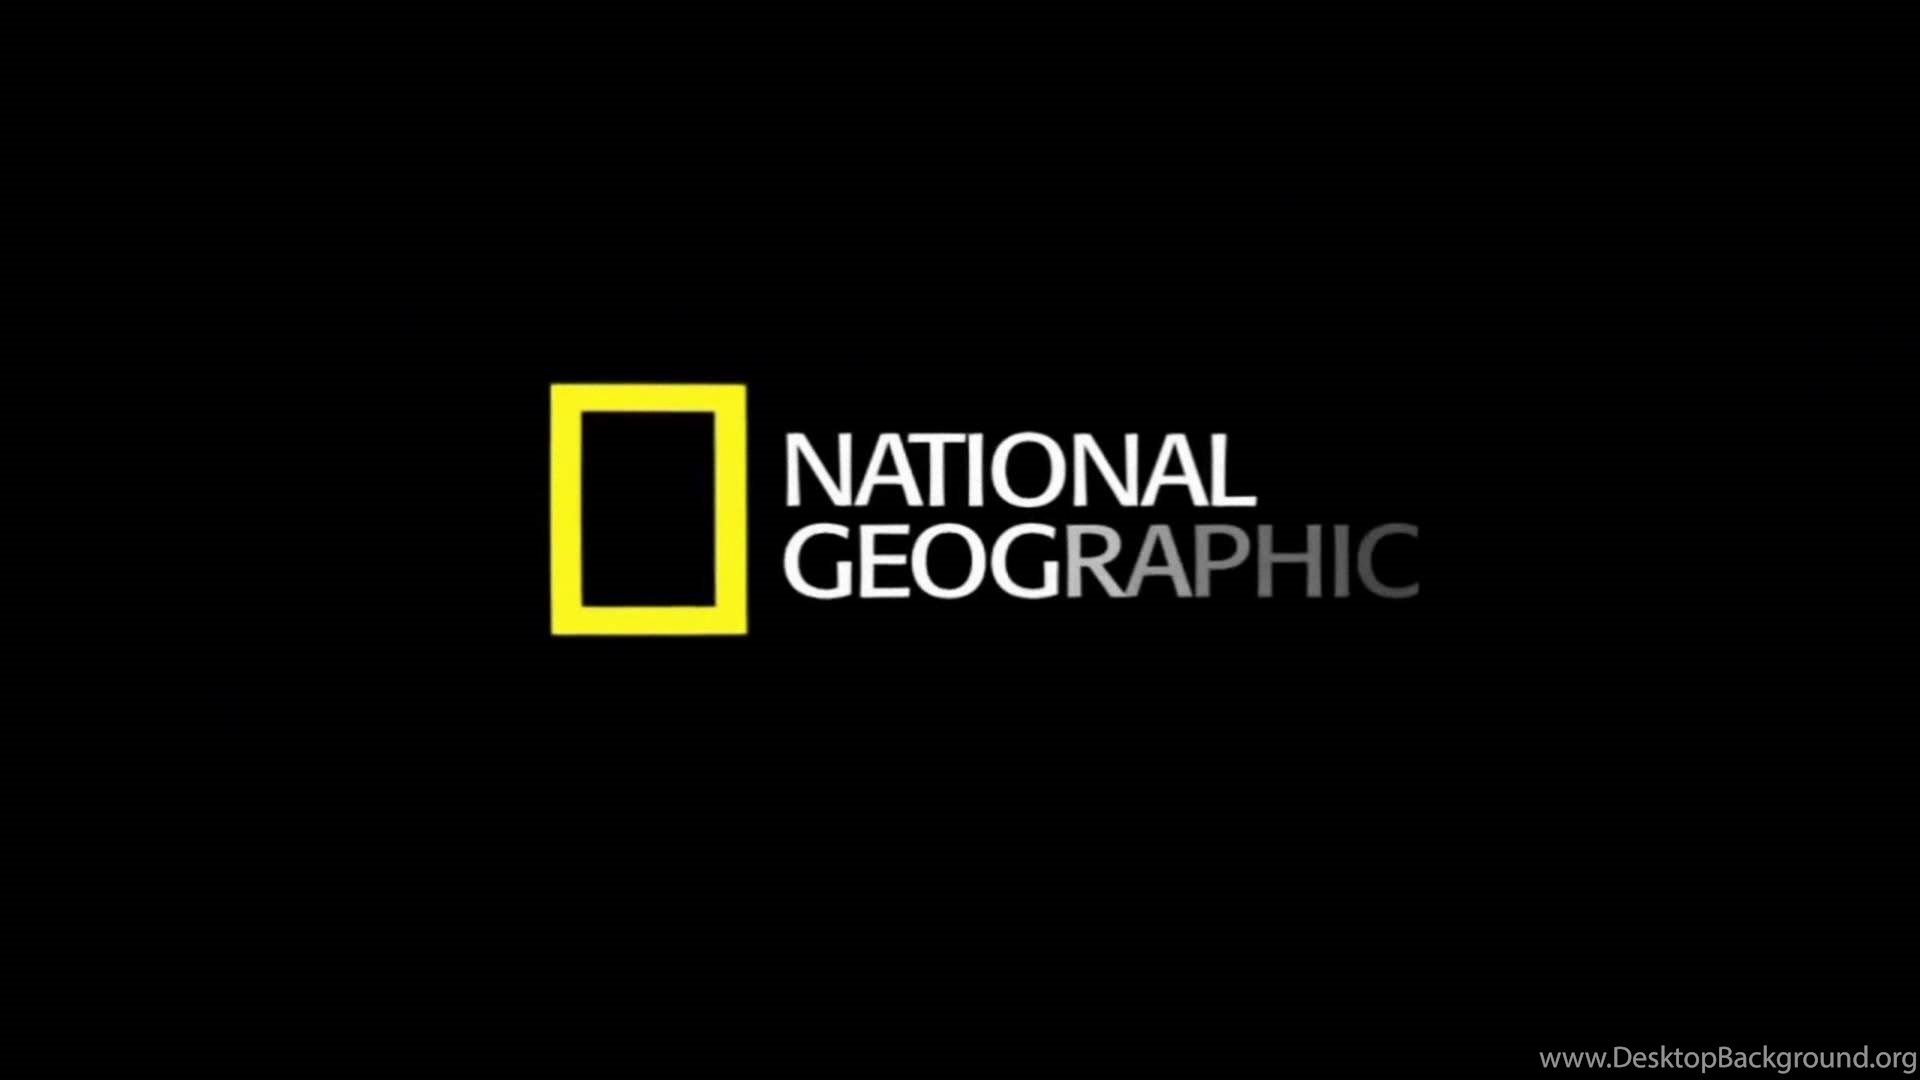 National Geographic Logo Wallpaper Mobile Desktop Background